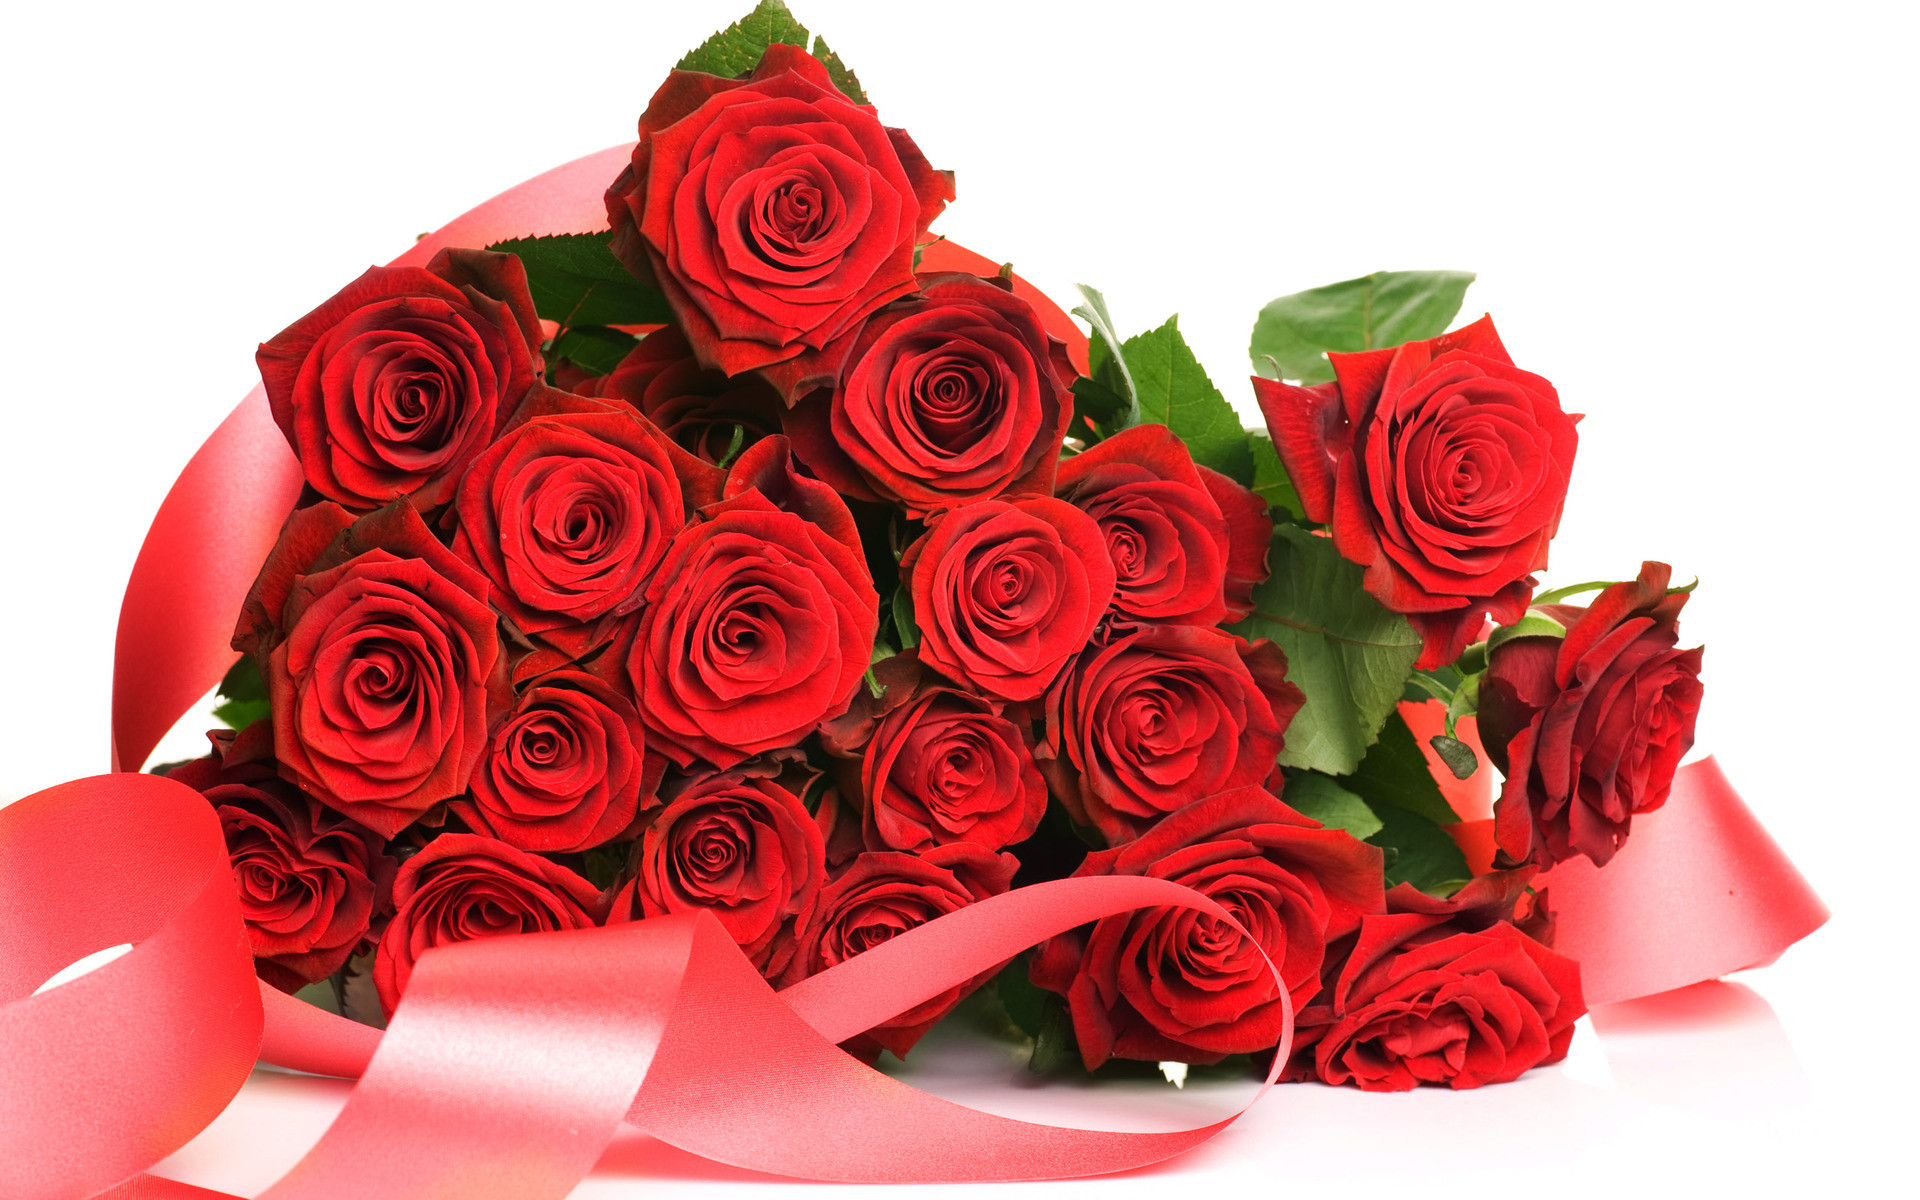 1920x1200 roses | Wallpaper, rose, floral, scraps, flower, red, roses -